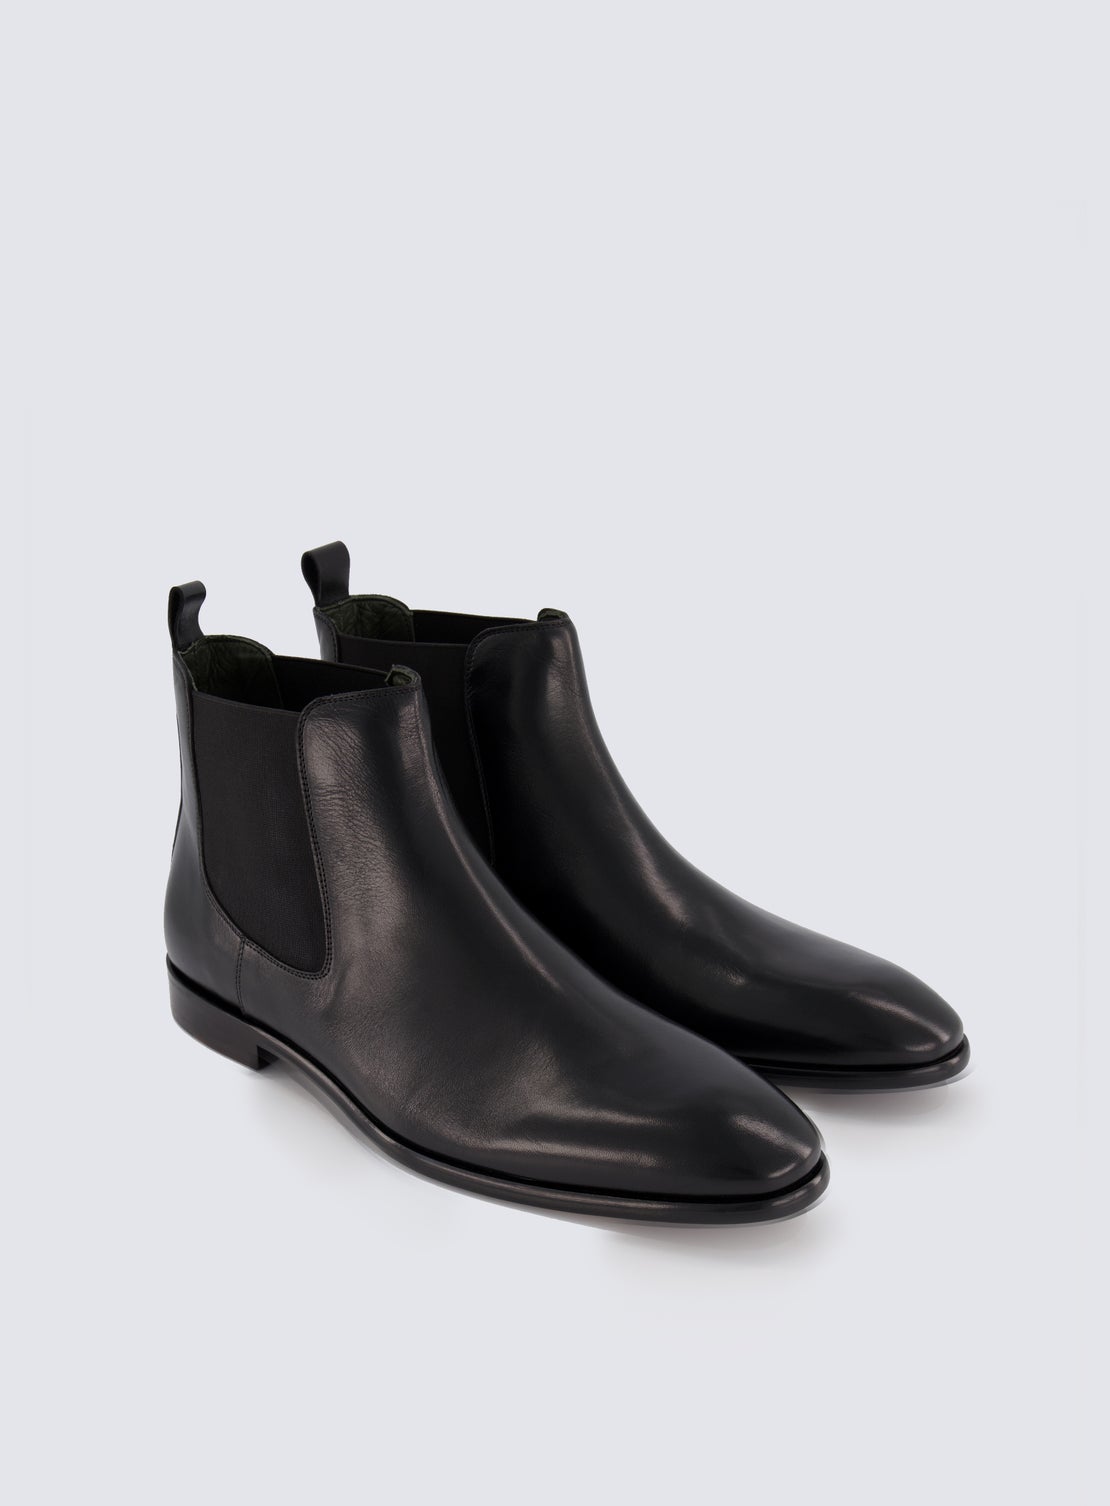 Barat Black Leather Chelsea Boot